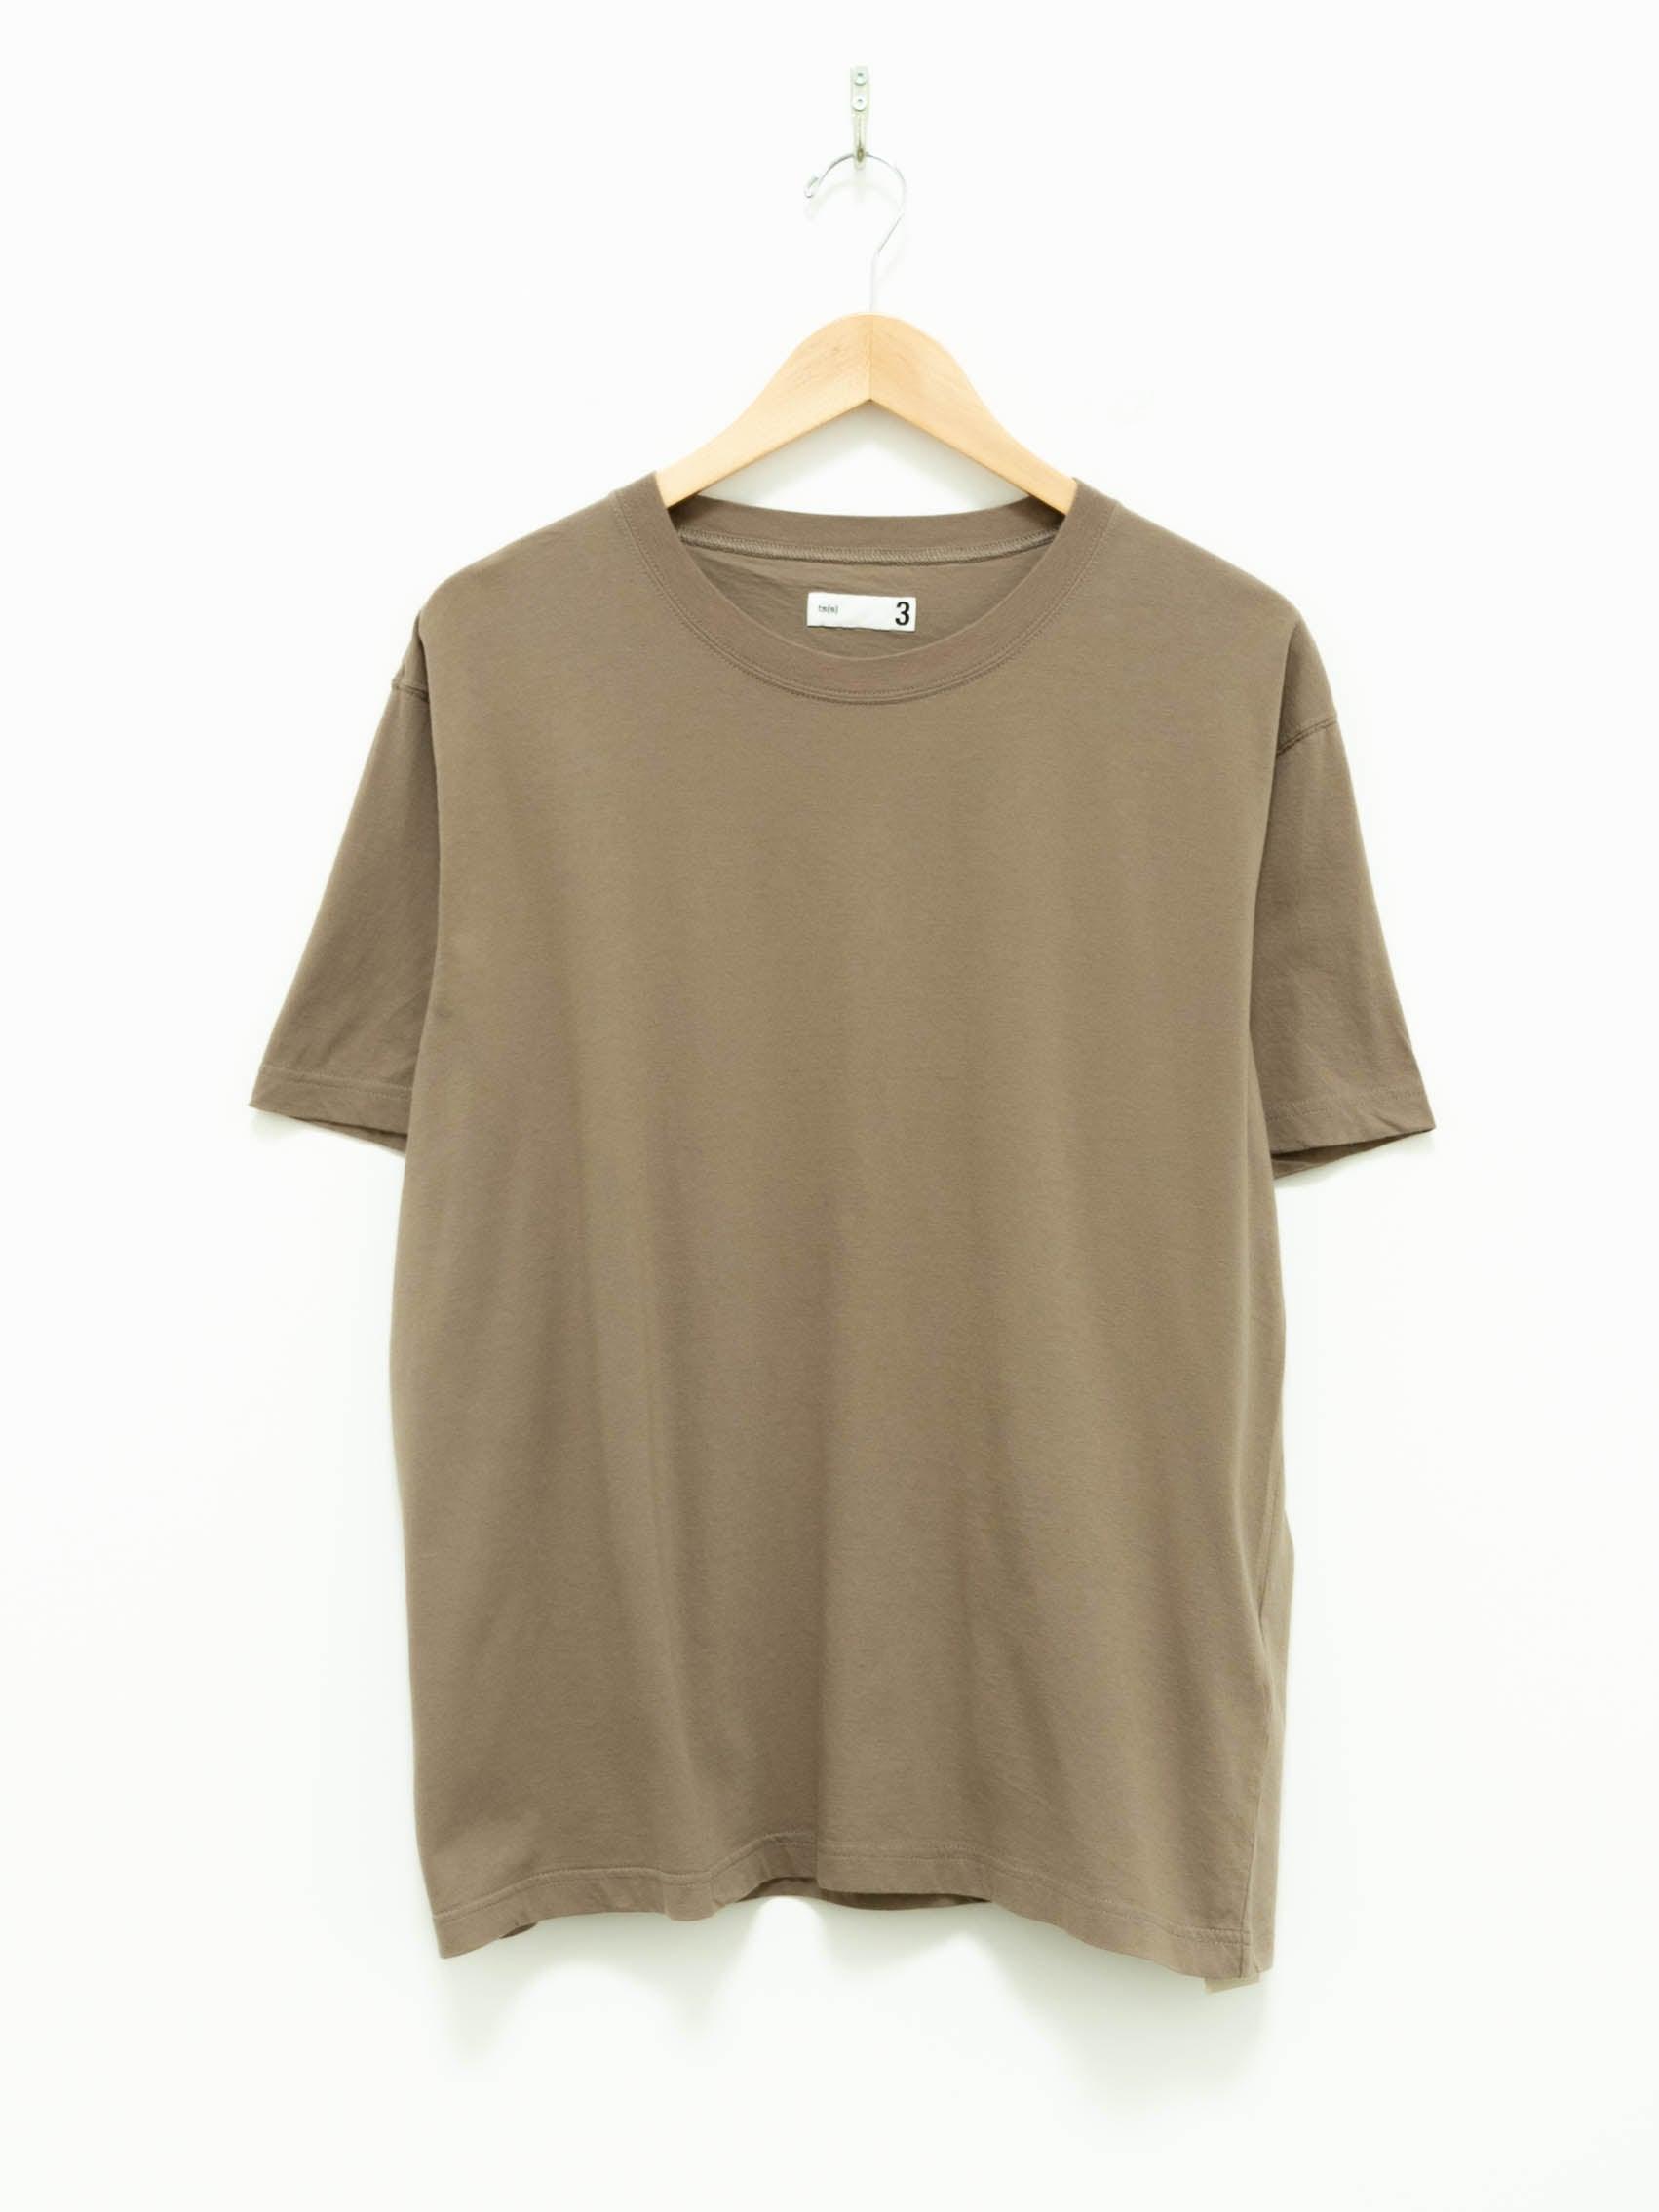 Namu Shop - ts(s) High Gauge Cotton Jersey Crewneck T-Shirt - Khaki